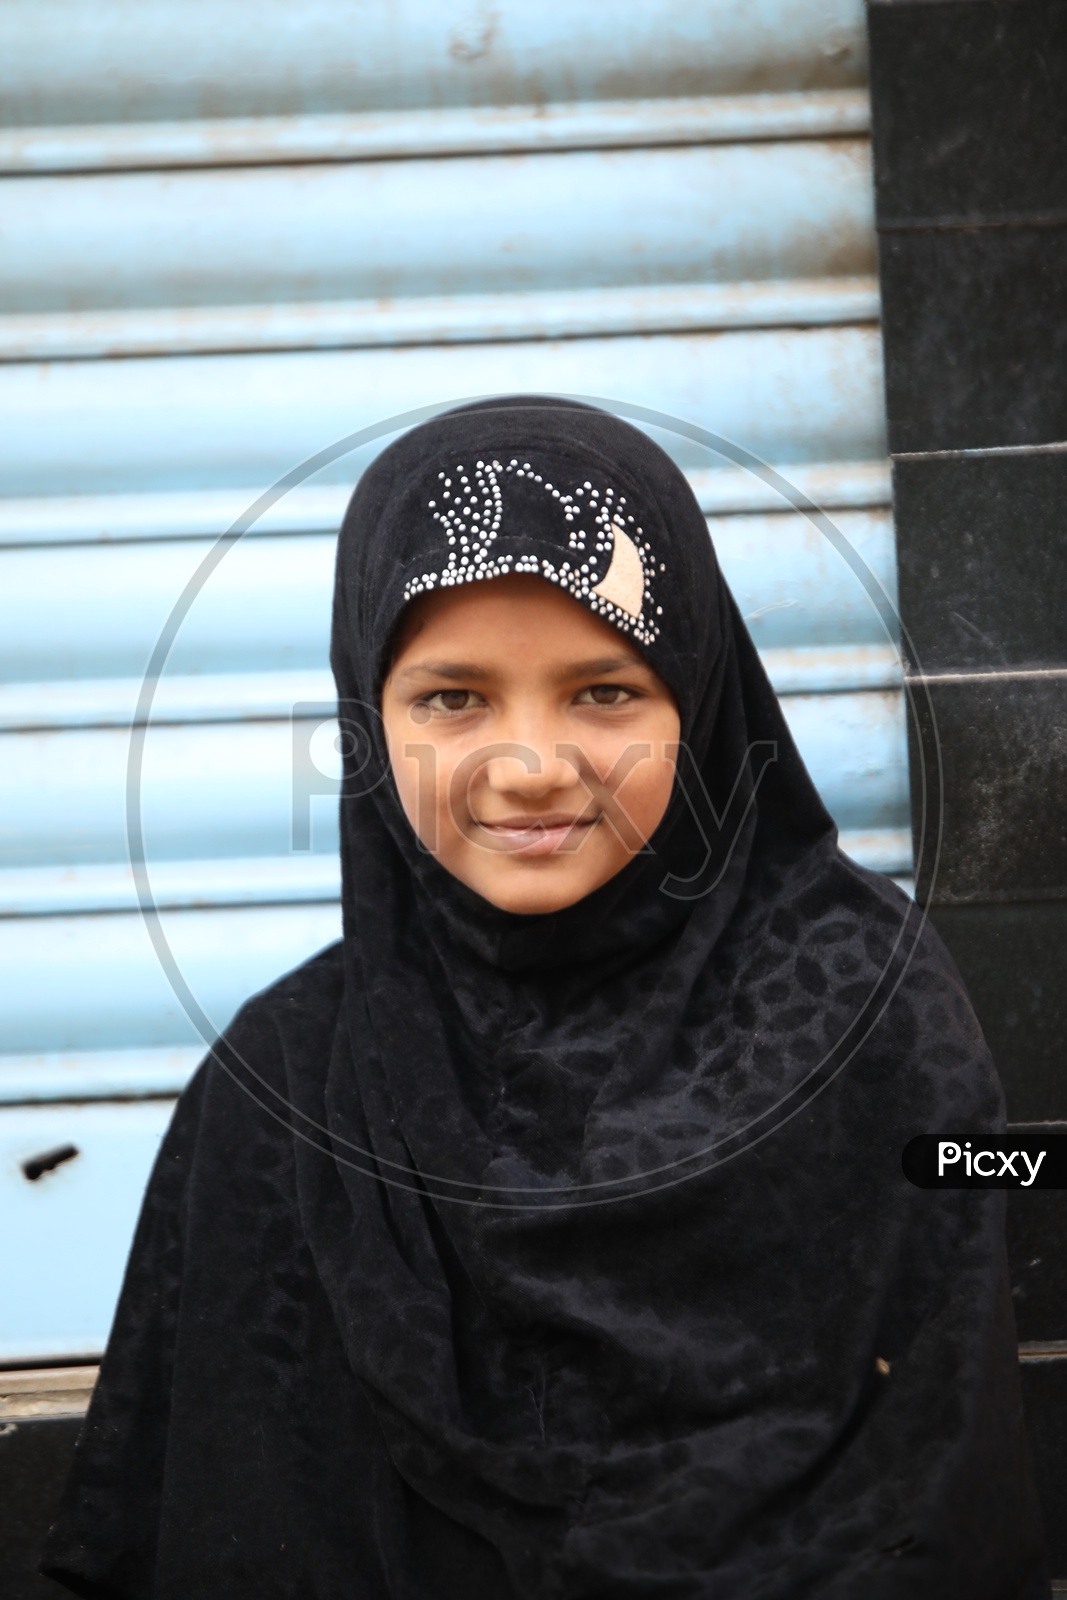 Portrait Of a Young Muslim Girl Wearing Burkha